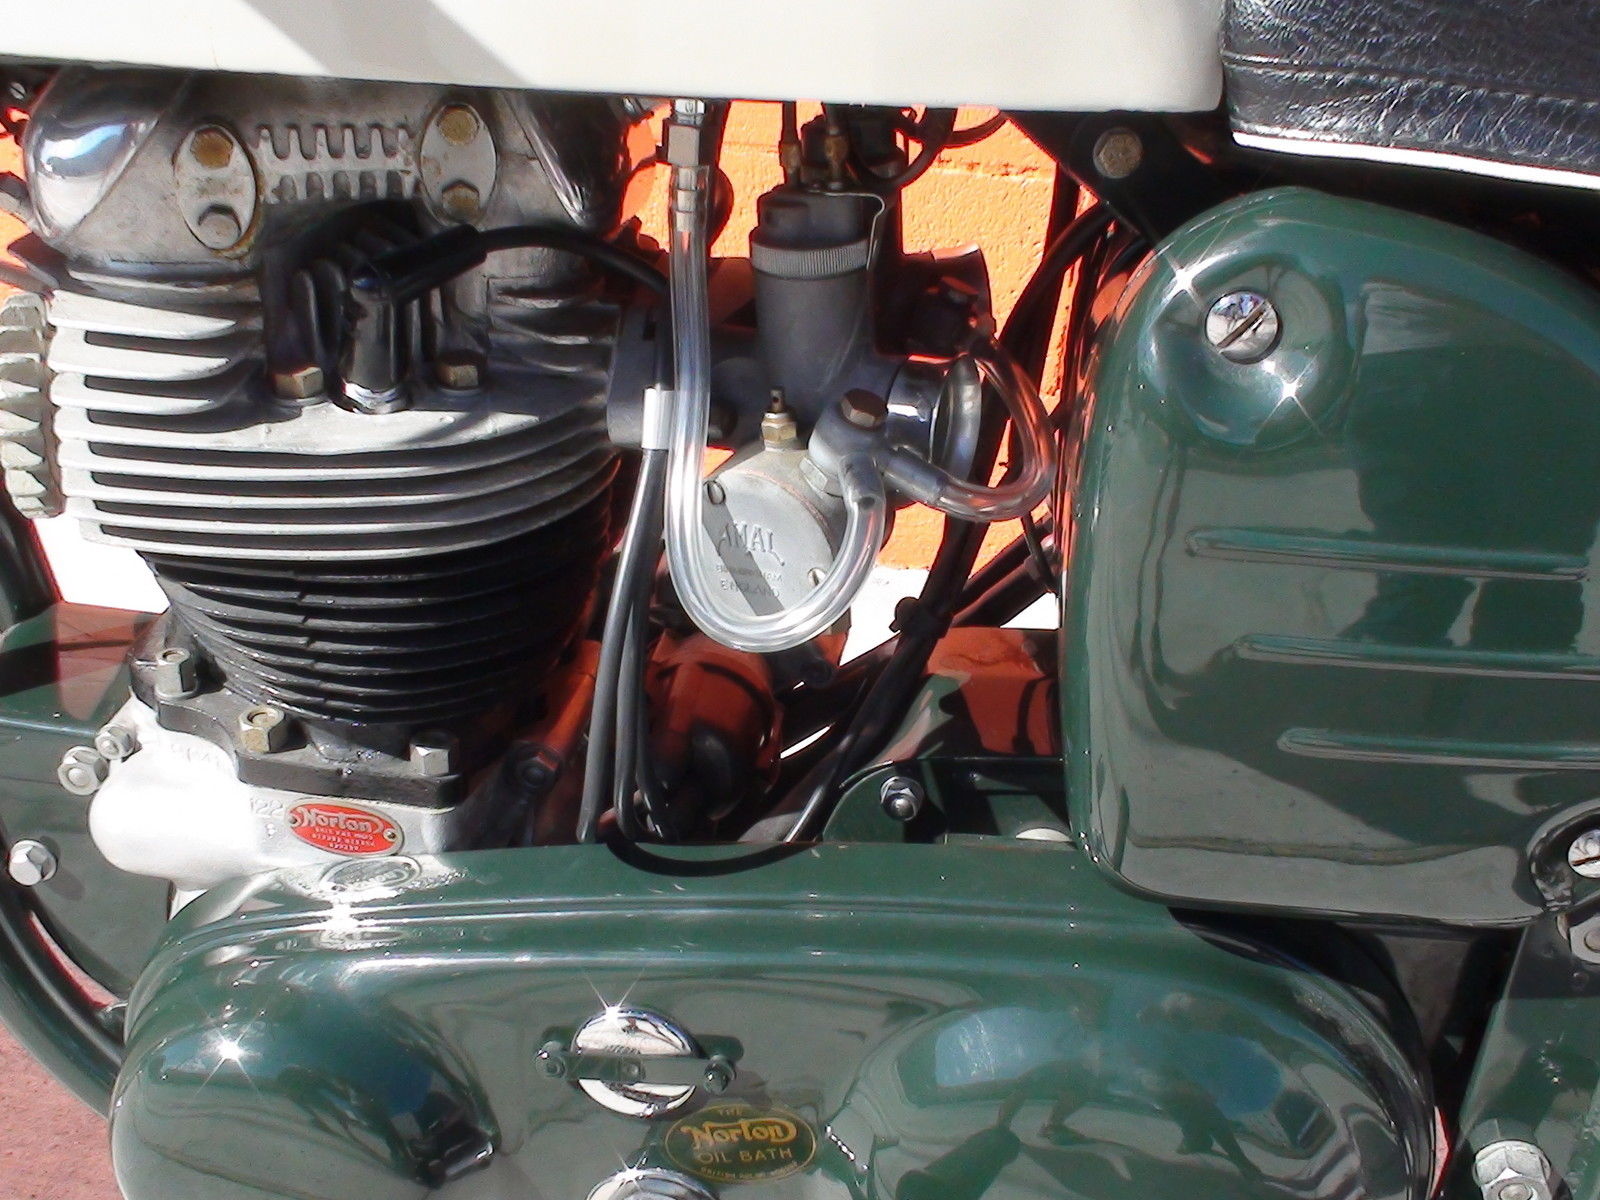 Norton Dominator 88 - 1960 - Carburettors, Side Cover and Cylinder.